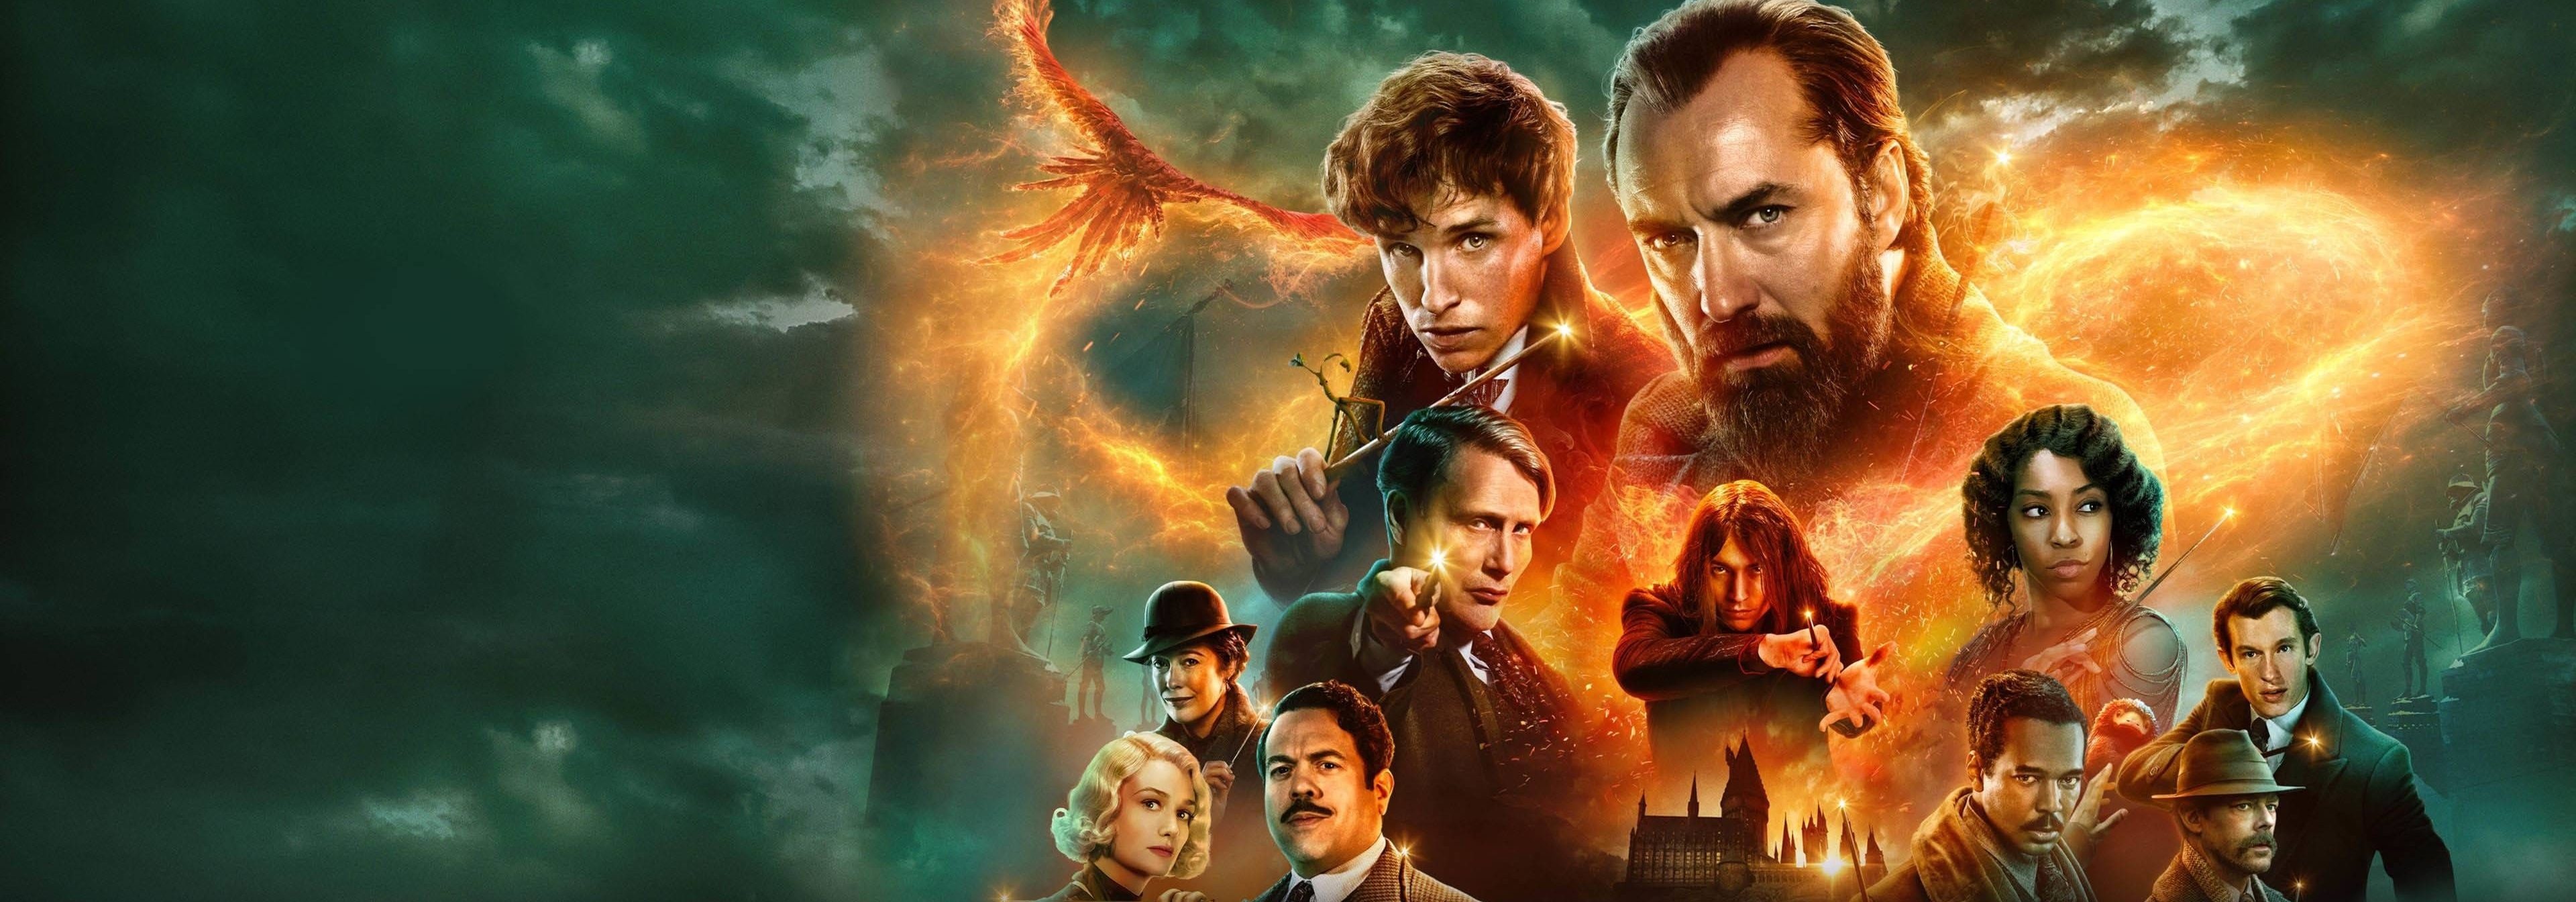 William Nadylam, Fantastic Beasts: The Secrets of Dumbledore, Movie review, 3840x1350 Dual Screen Desktop